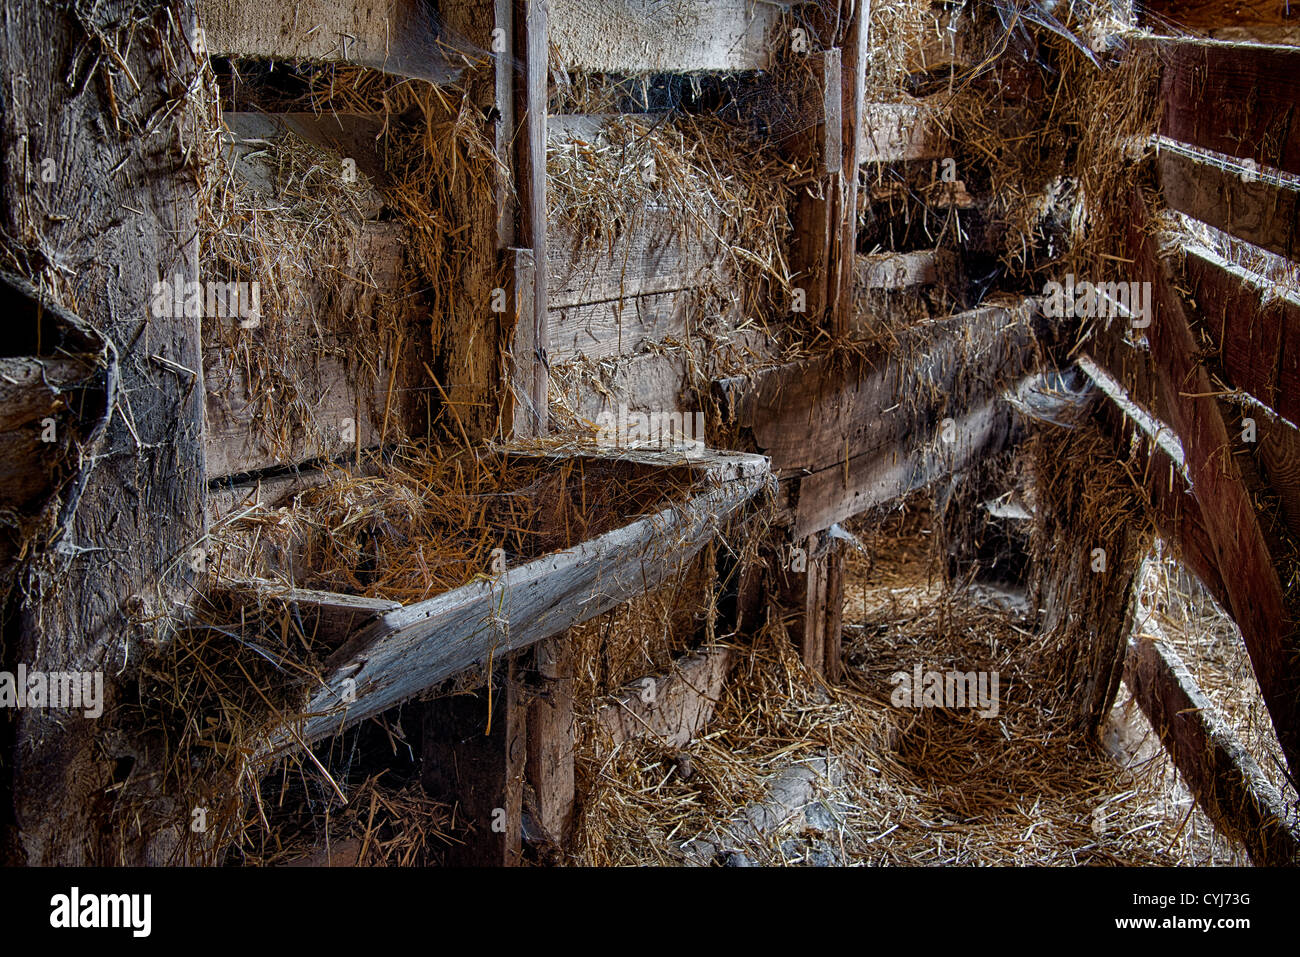 Livestock feeding trough in old barn. Stock Photo